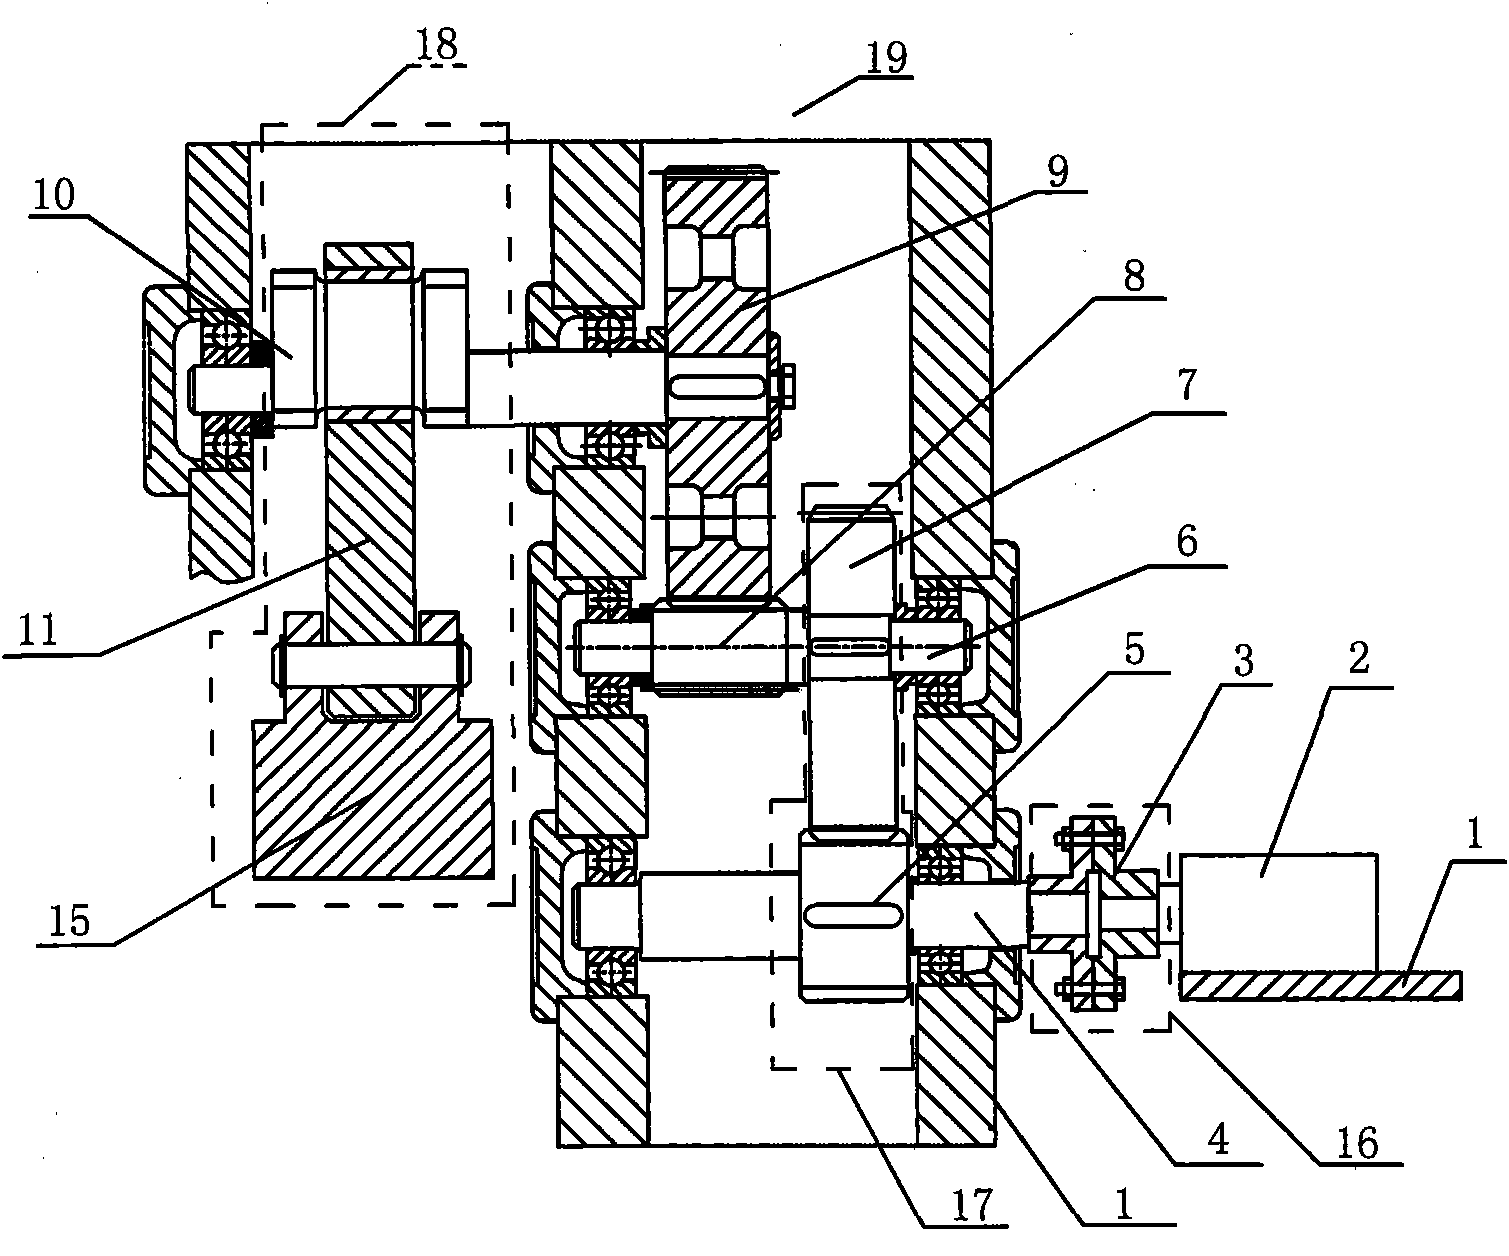 Numerical control servo press machine with non-circular gear transmission mechanism